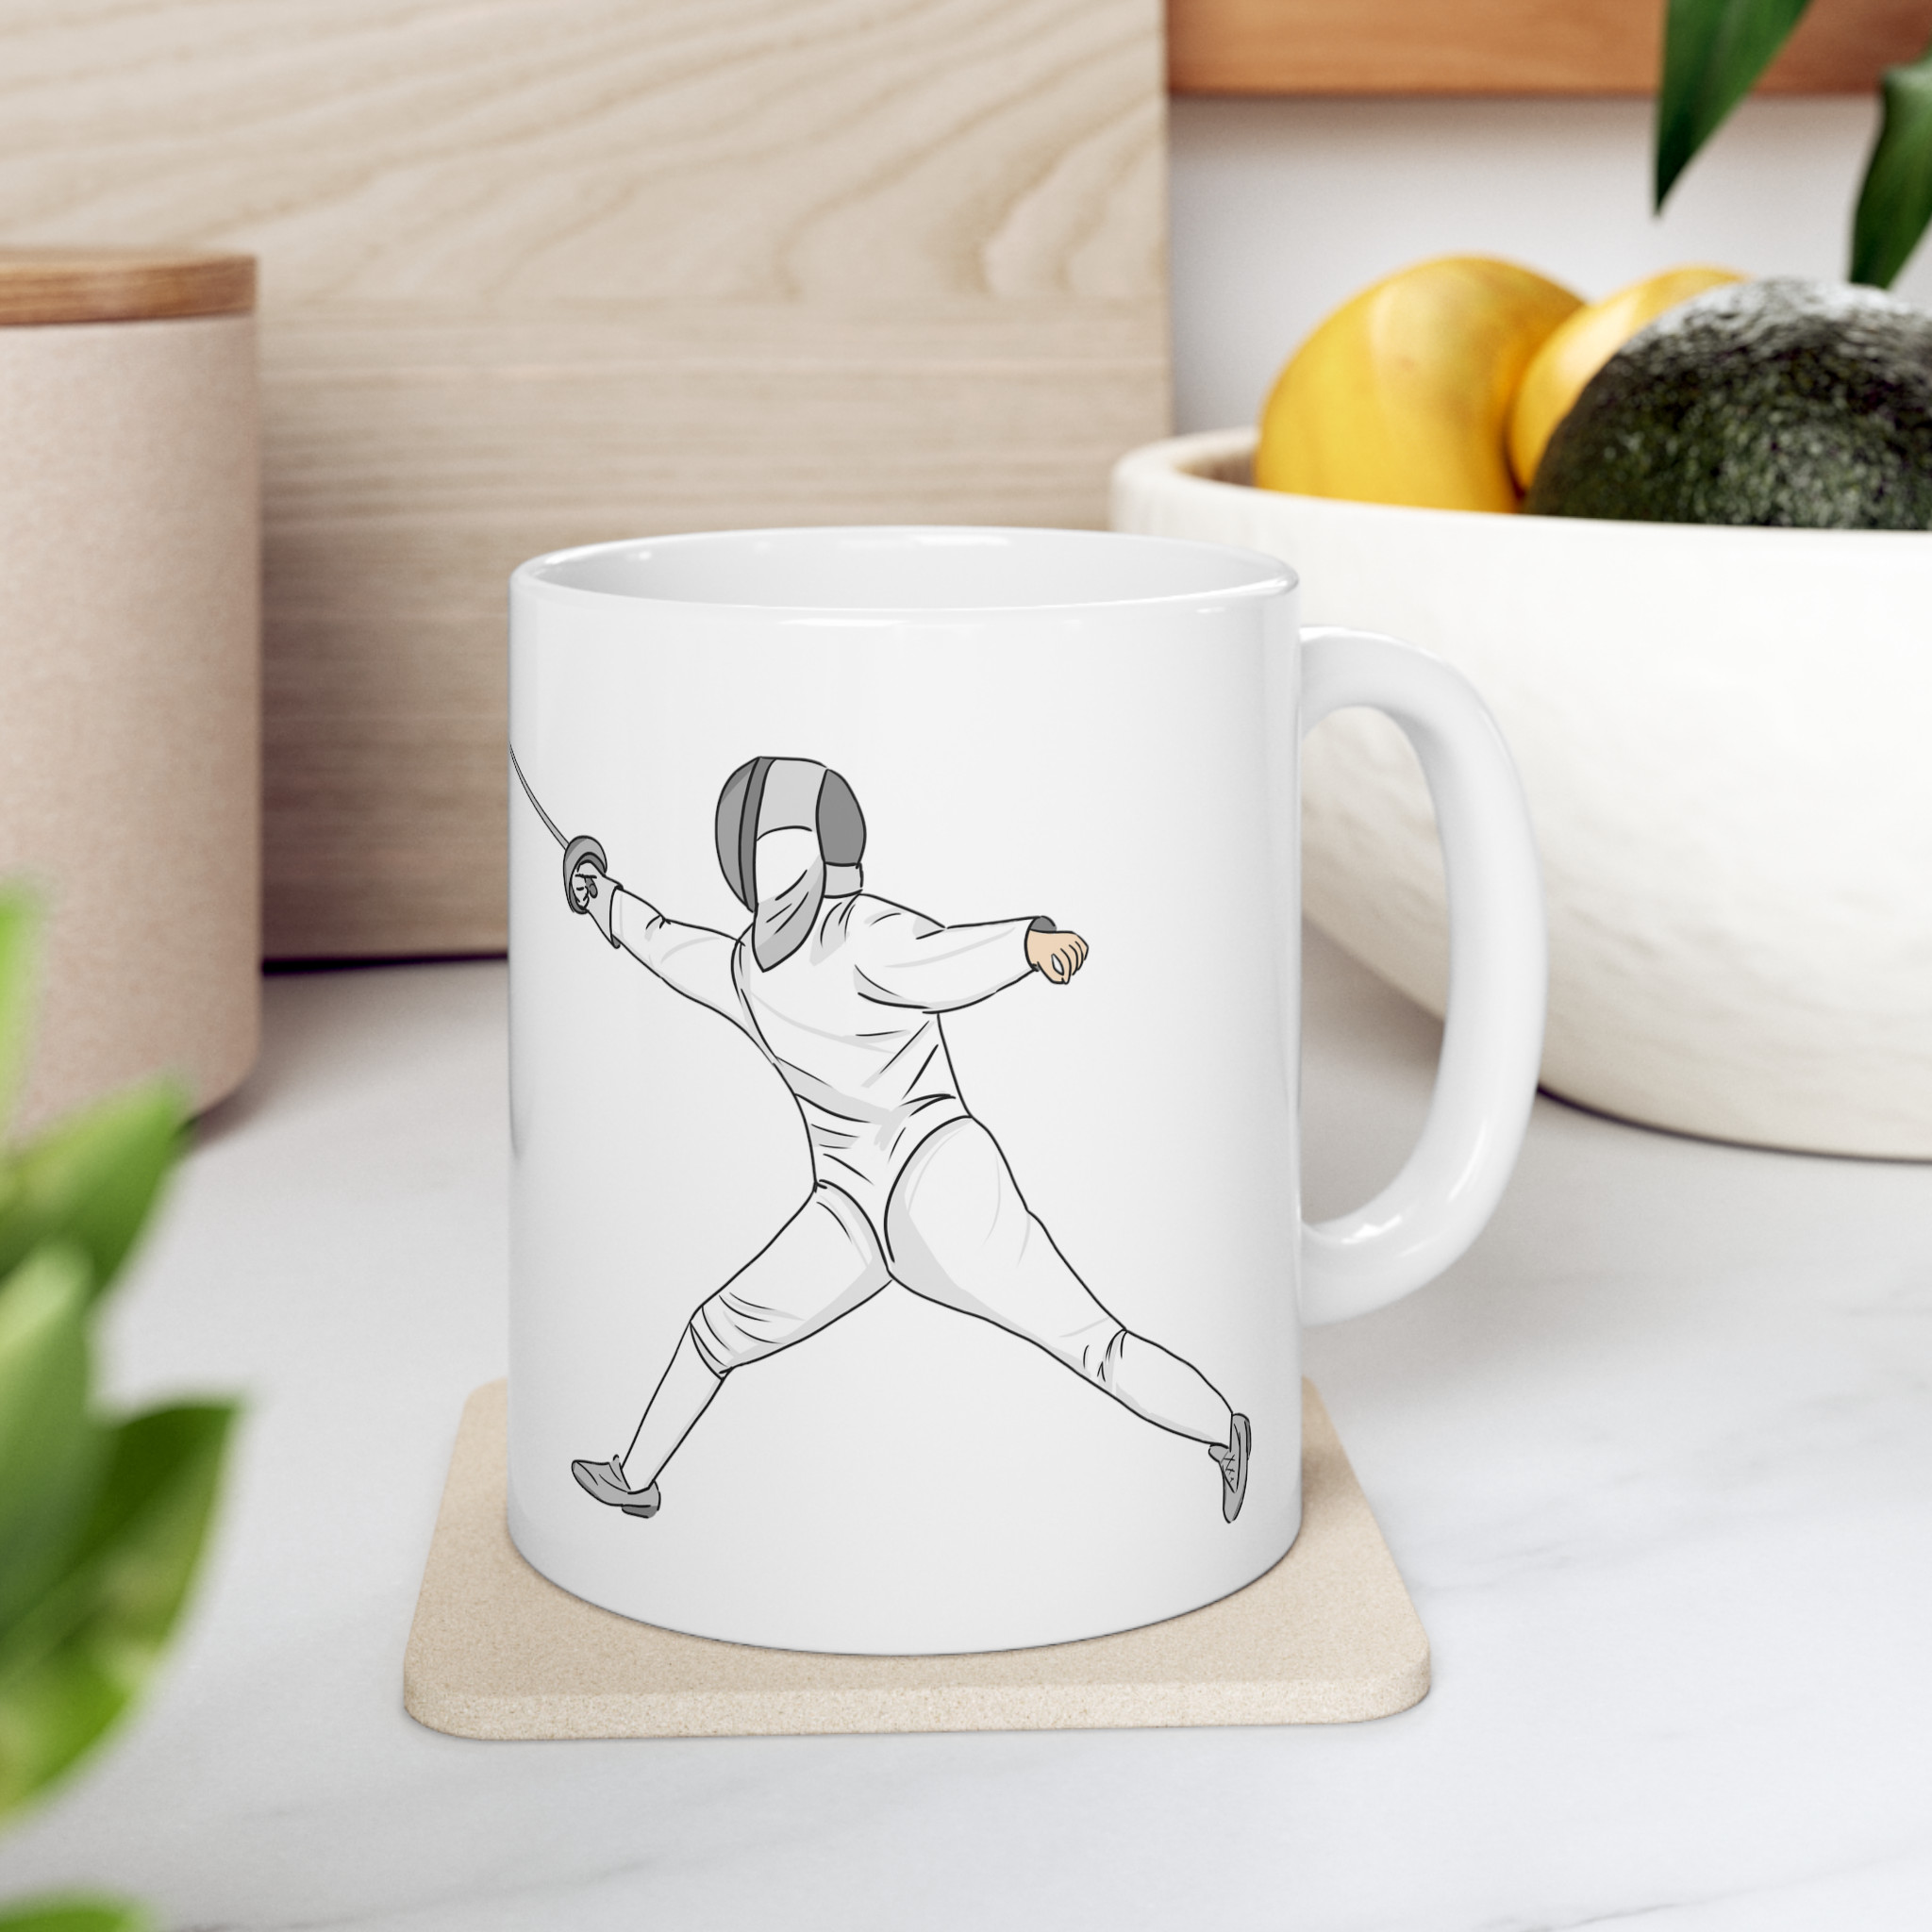 Taekwondo, Martial Arts, Taekwondo Mom Definition Gifts For Mom Funny  Gifts Coffee Mug